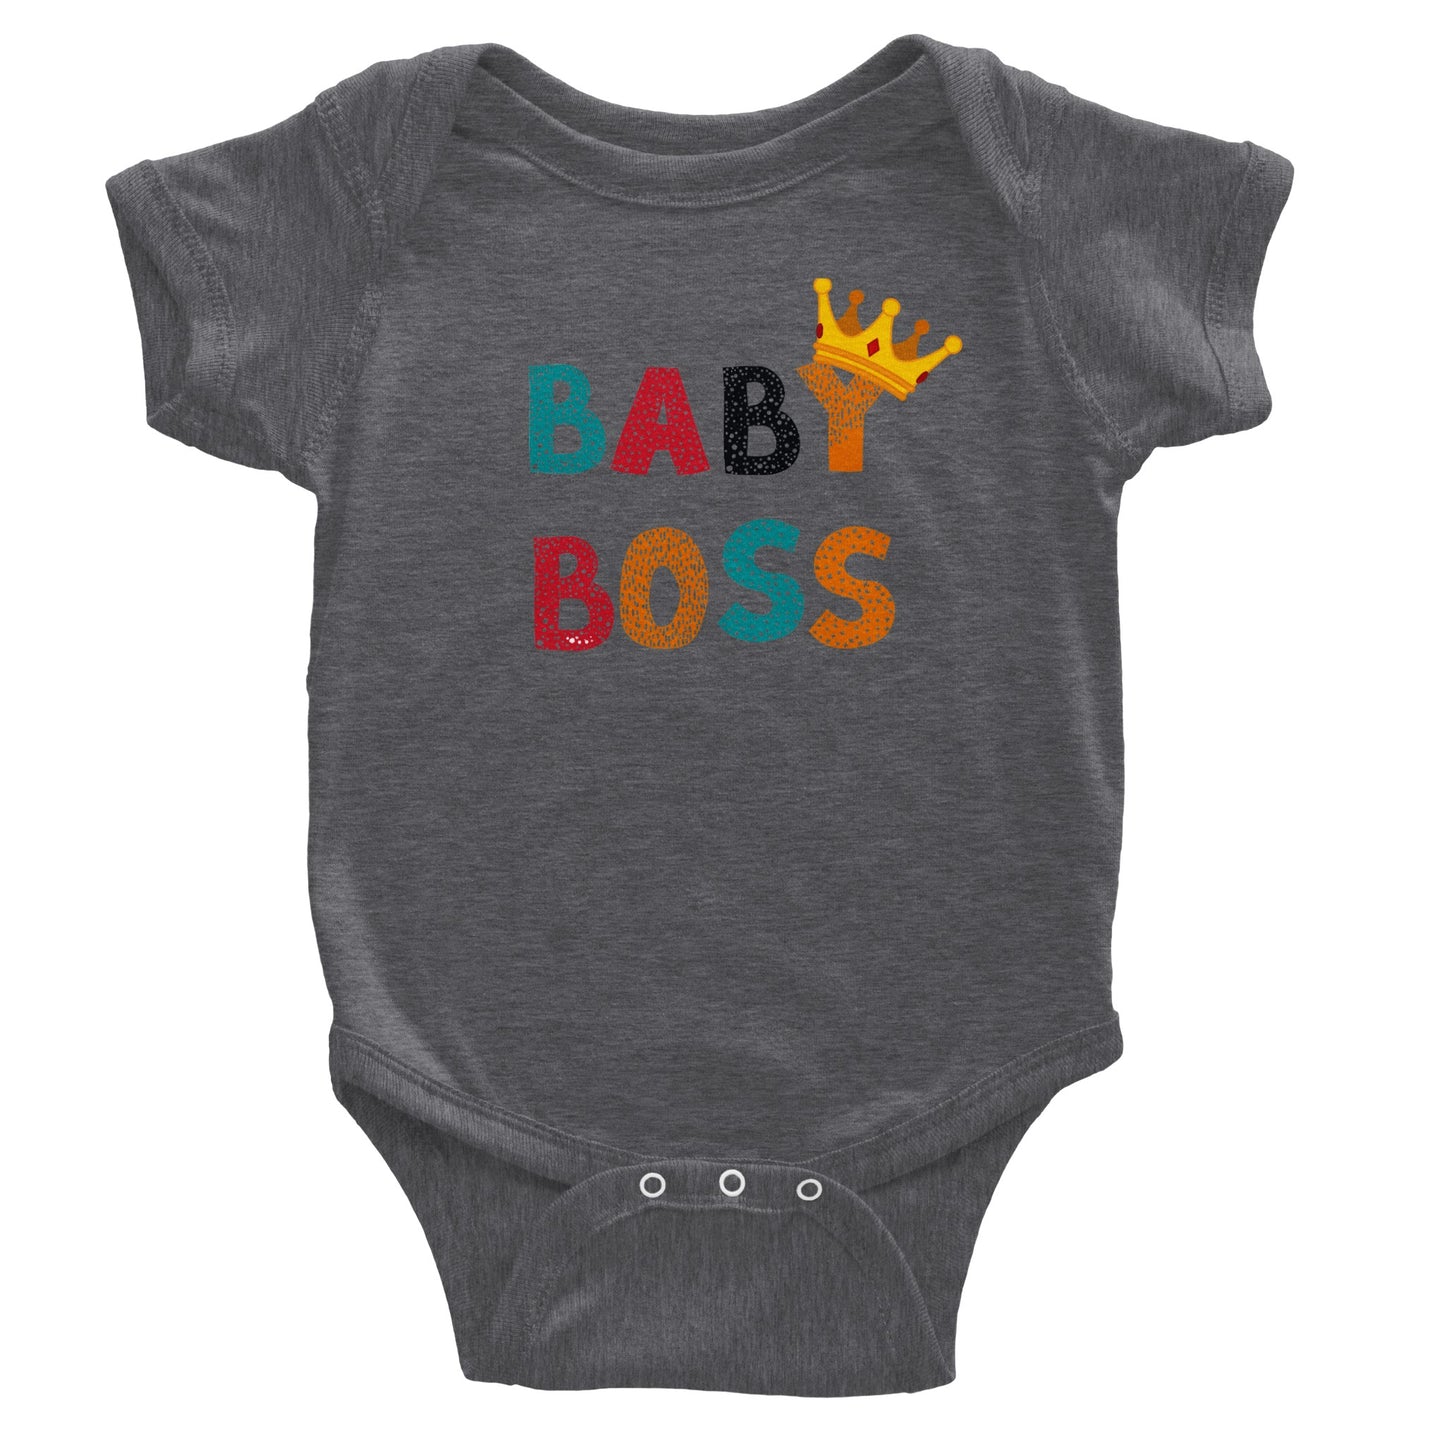 Baby boss body